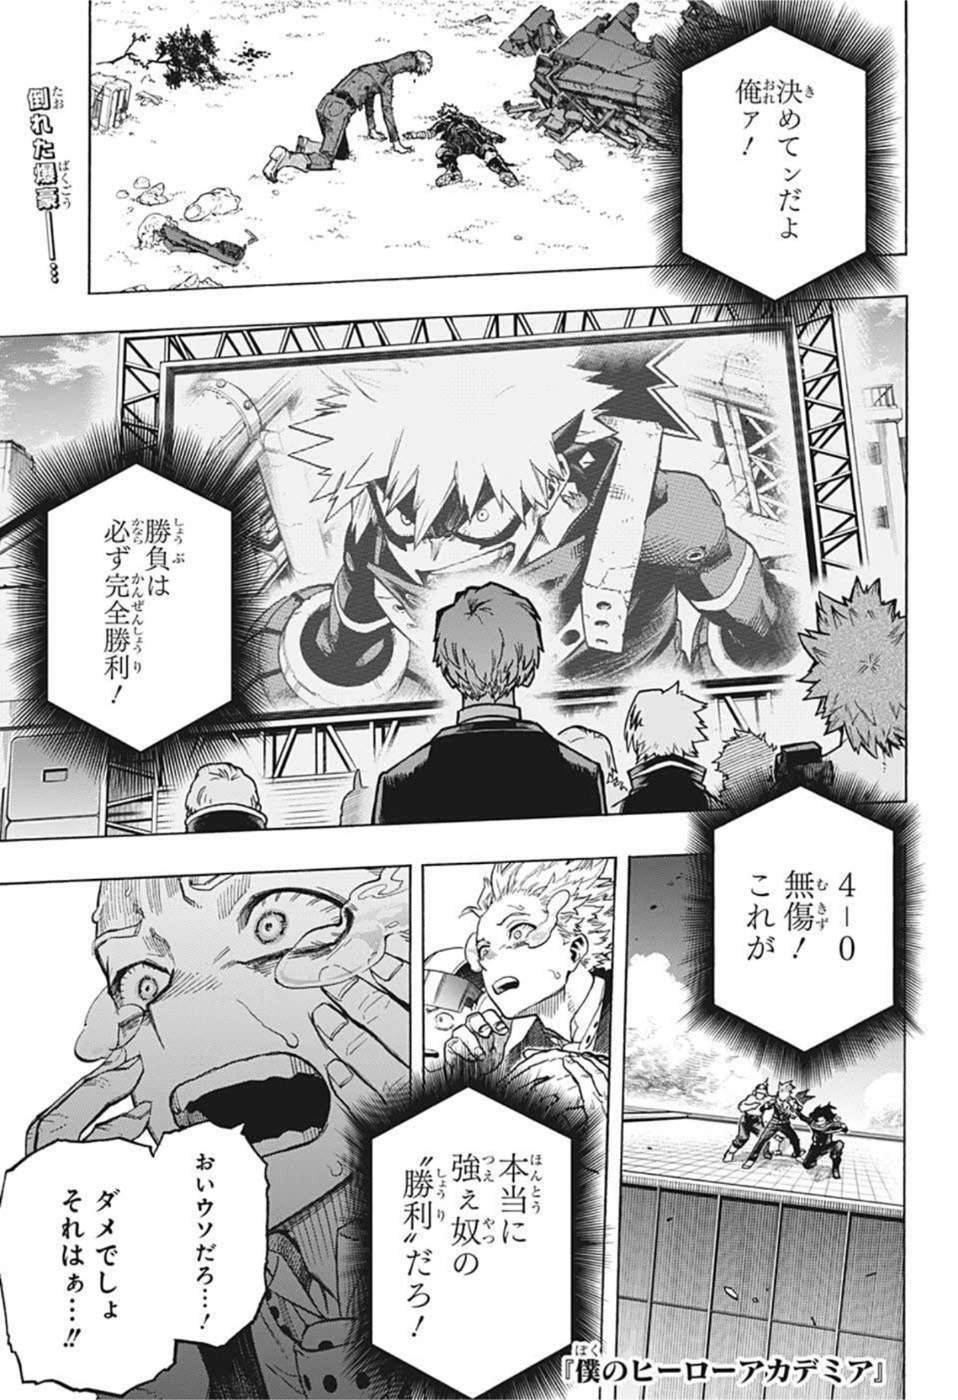 Boku no Hero Academia - Chapter 363 - Page 1